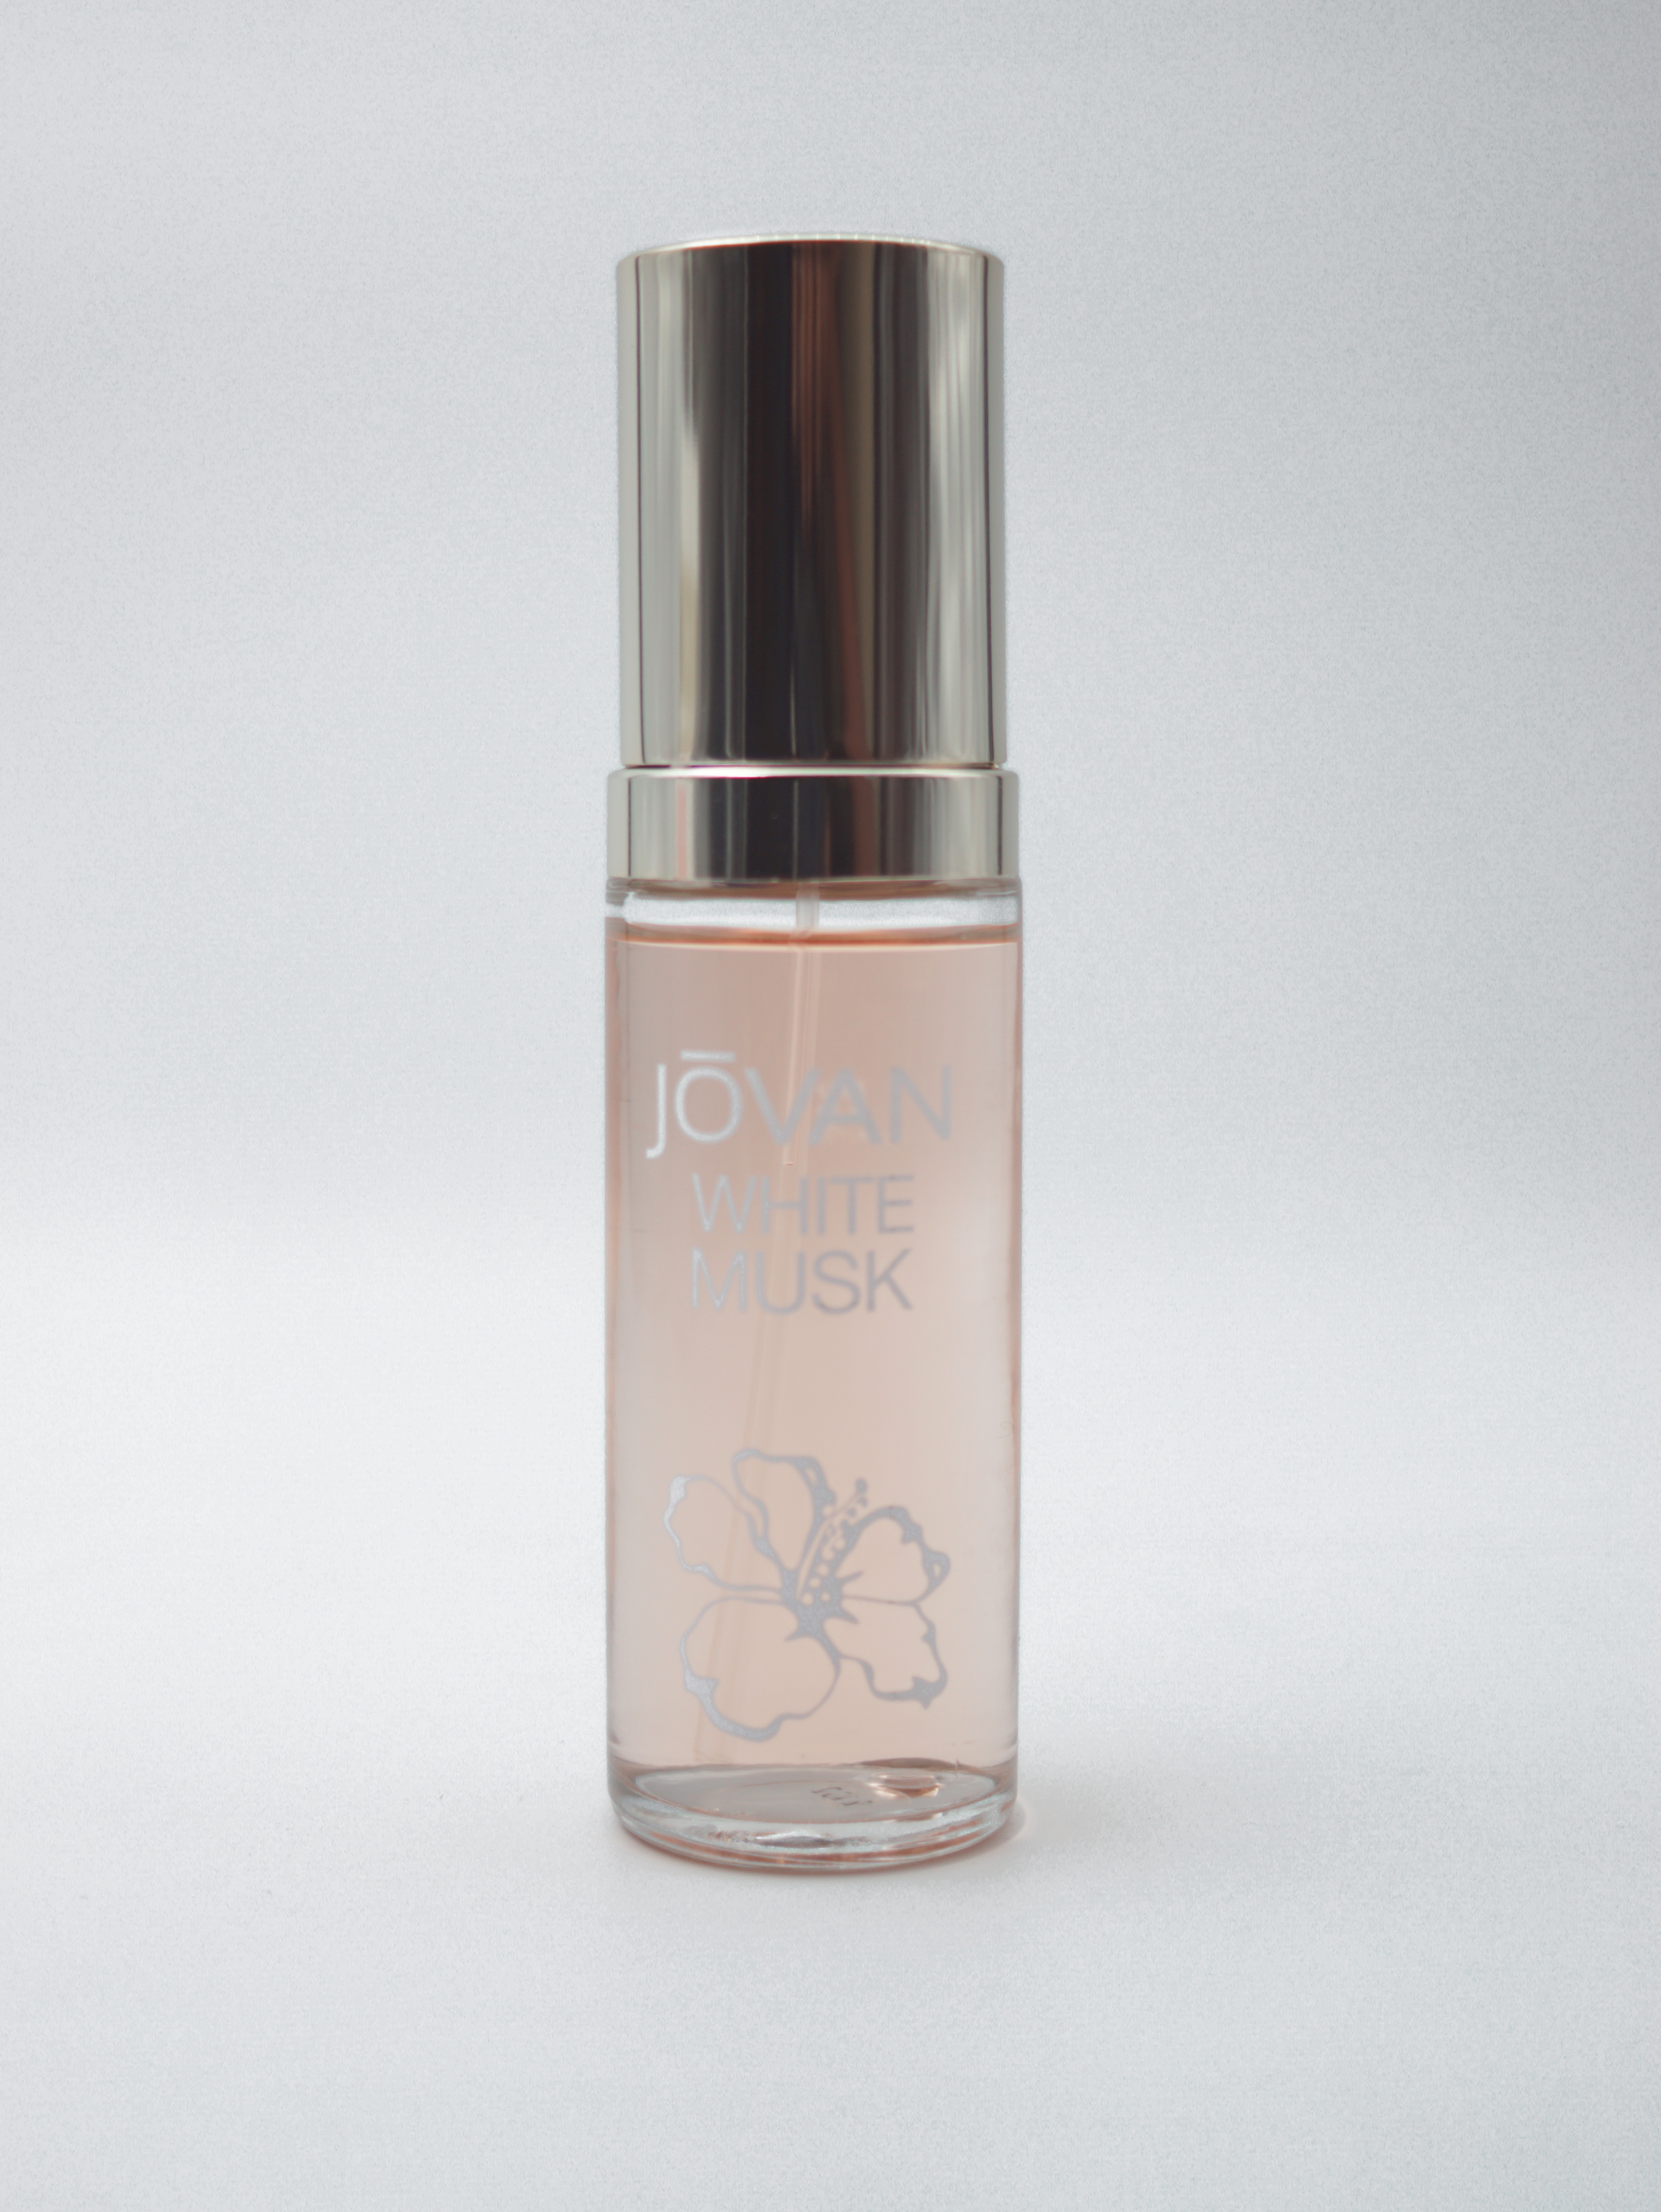 Jovan White Musk 59 ml Cologne Concentree En Vaporisateur Spray Perfume For Women SKU 96849